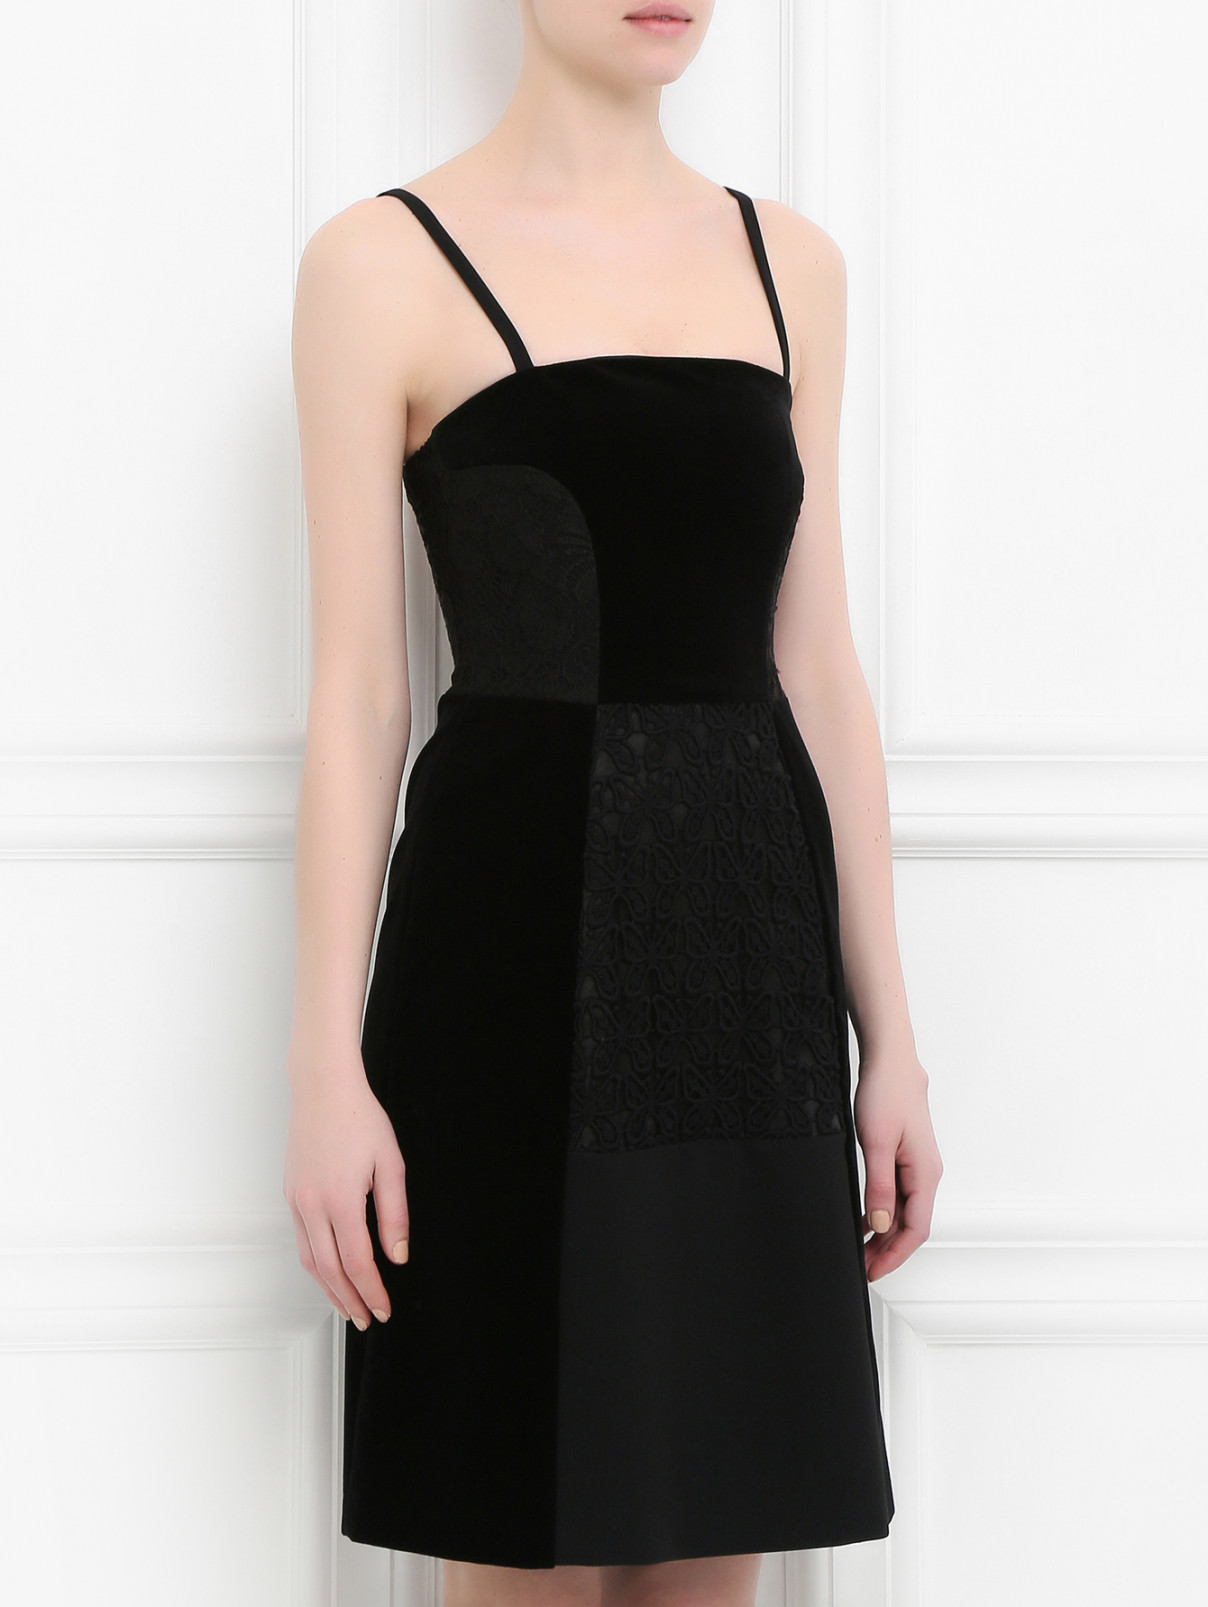 Платье-футляр из бархата и кружева Moschino Cheap&Chic  –  Модель Верх-Низ  – Цвет:  Черный